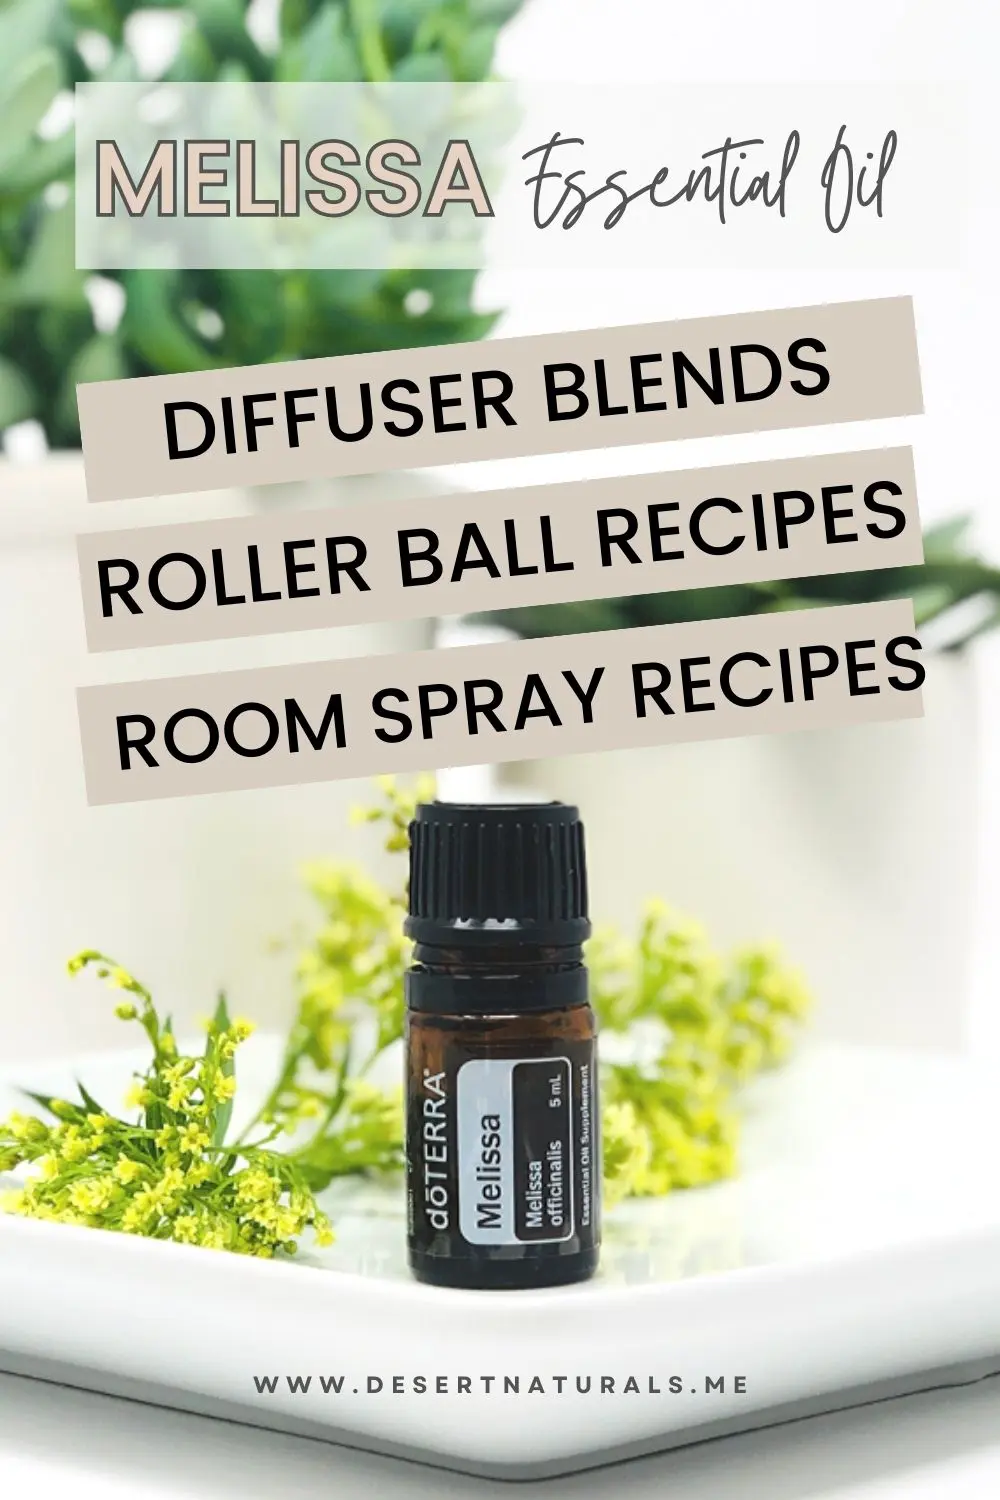 melissa essential oil diffuser blends roller ball recipes room spray recipes pinterest pin